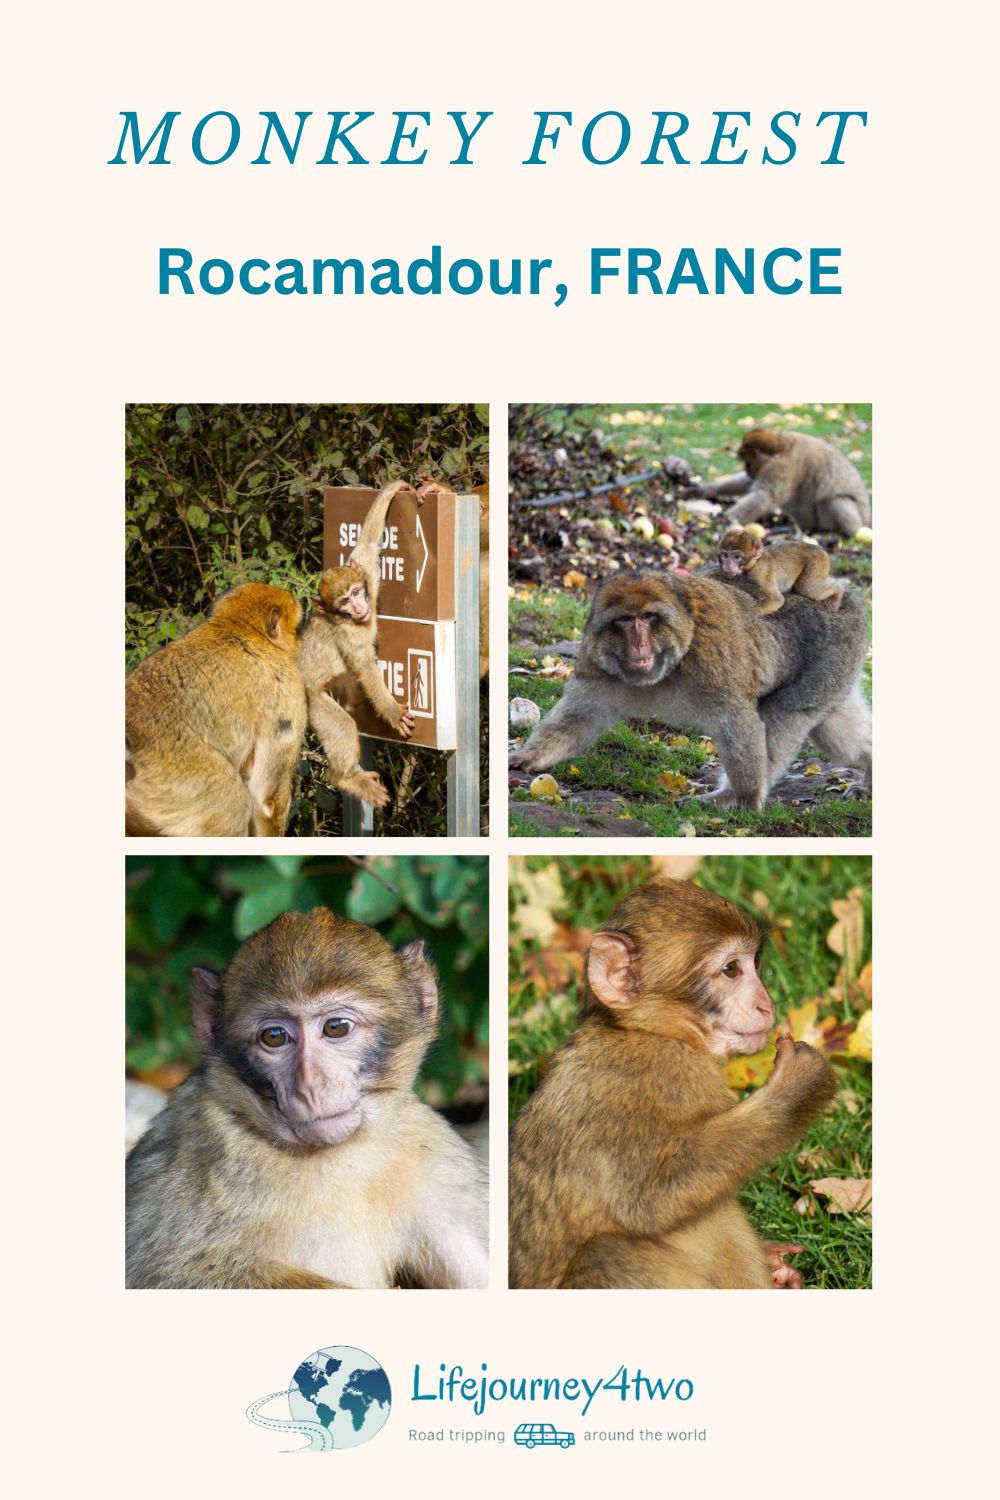 Rocamadour monkey forest pinterest pin